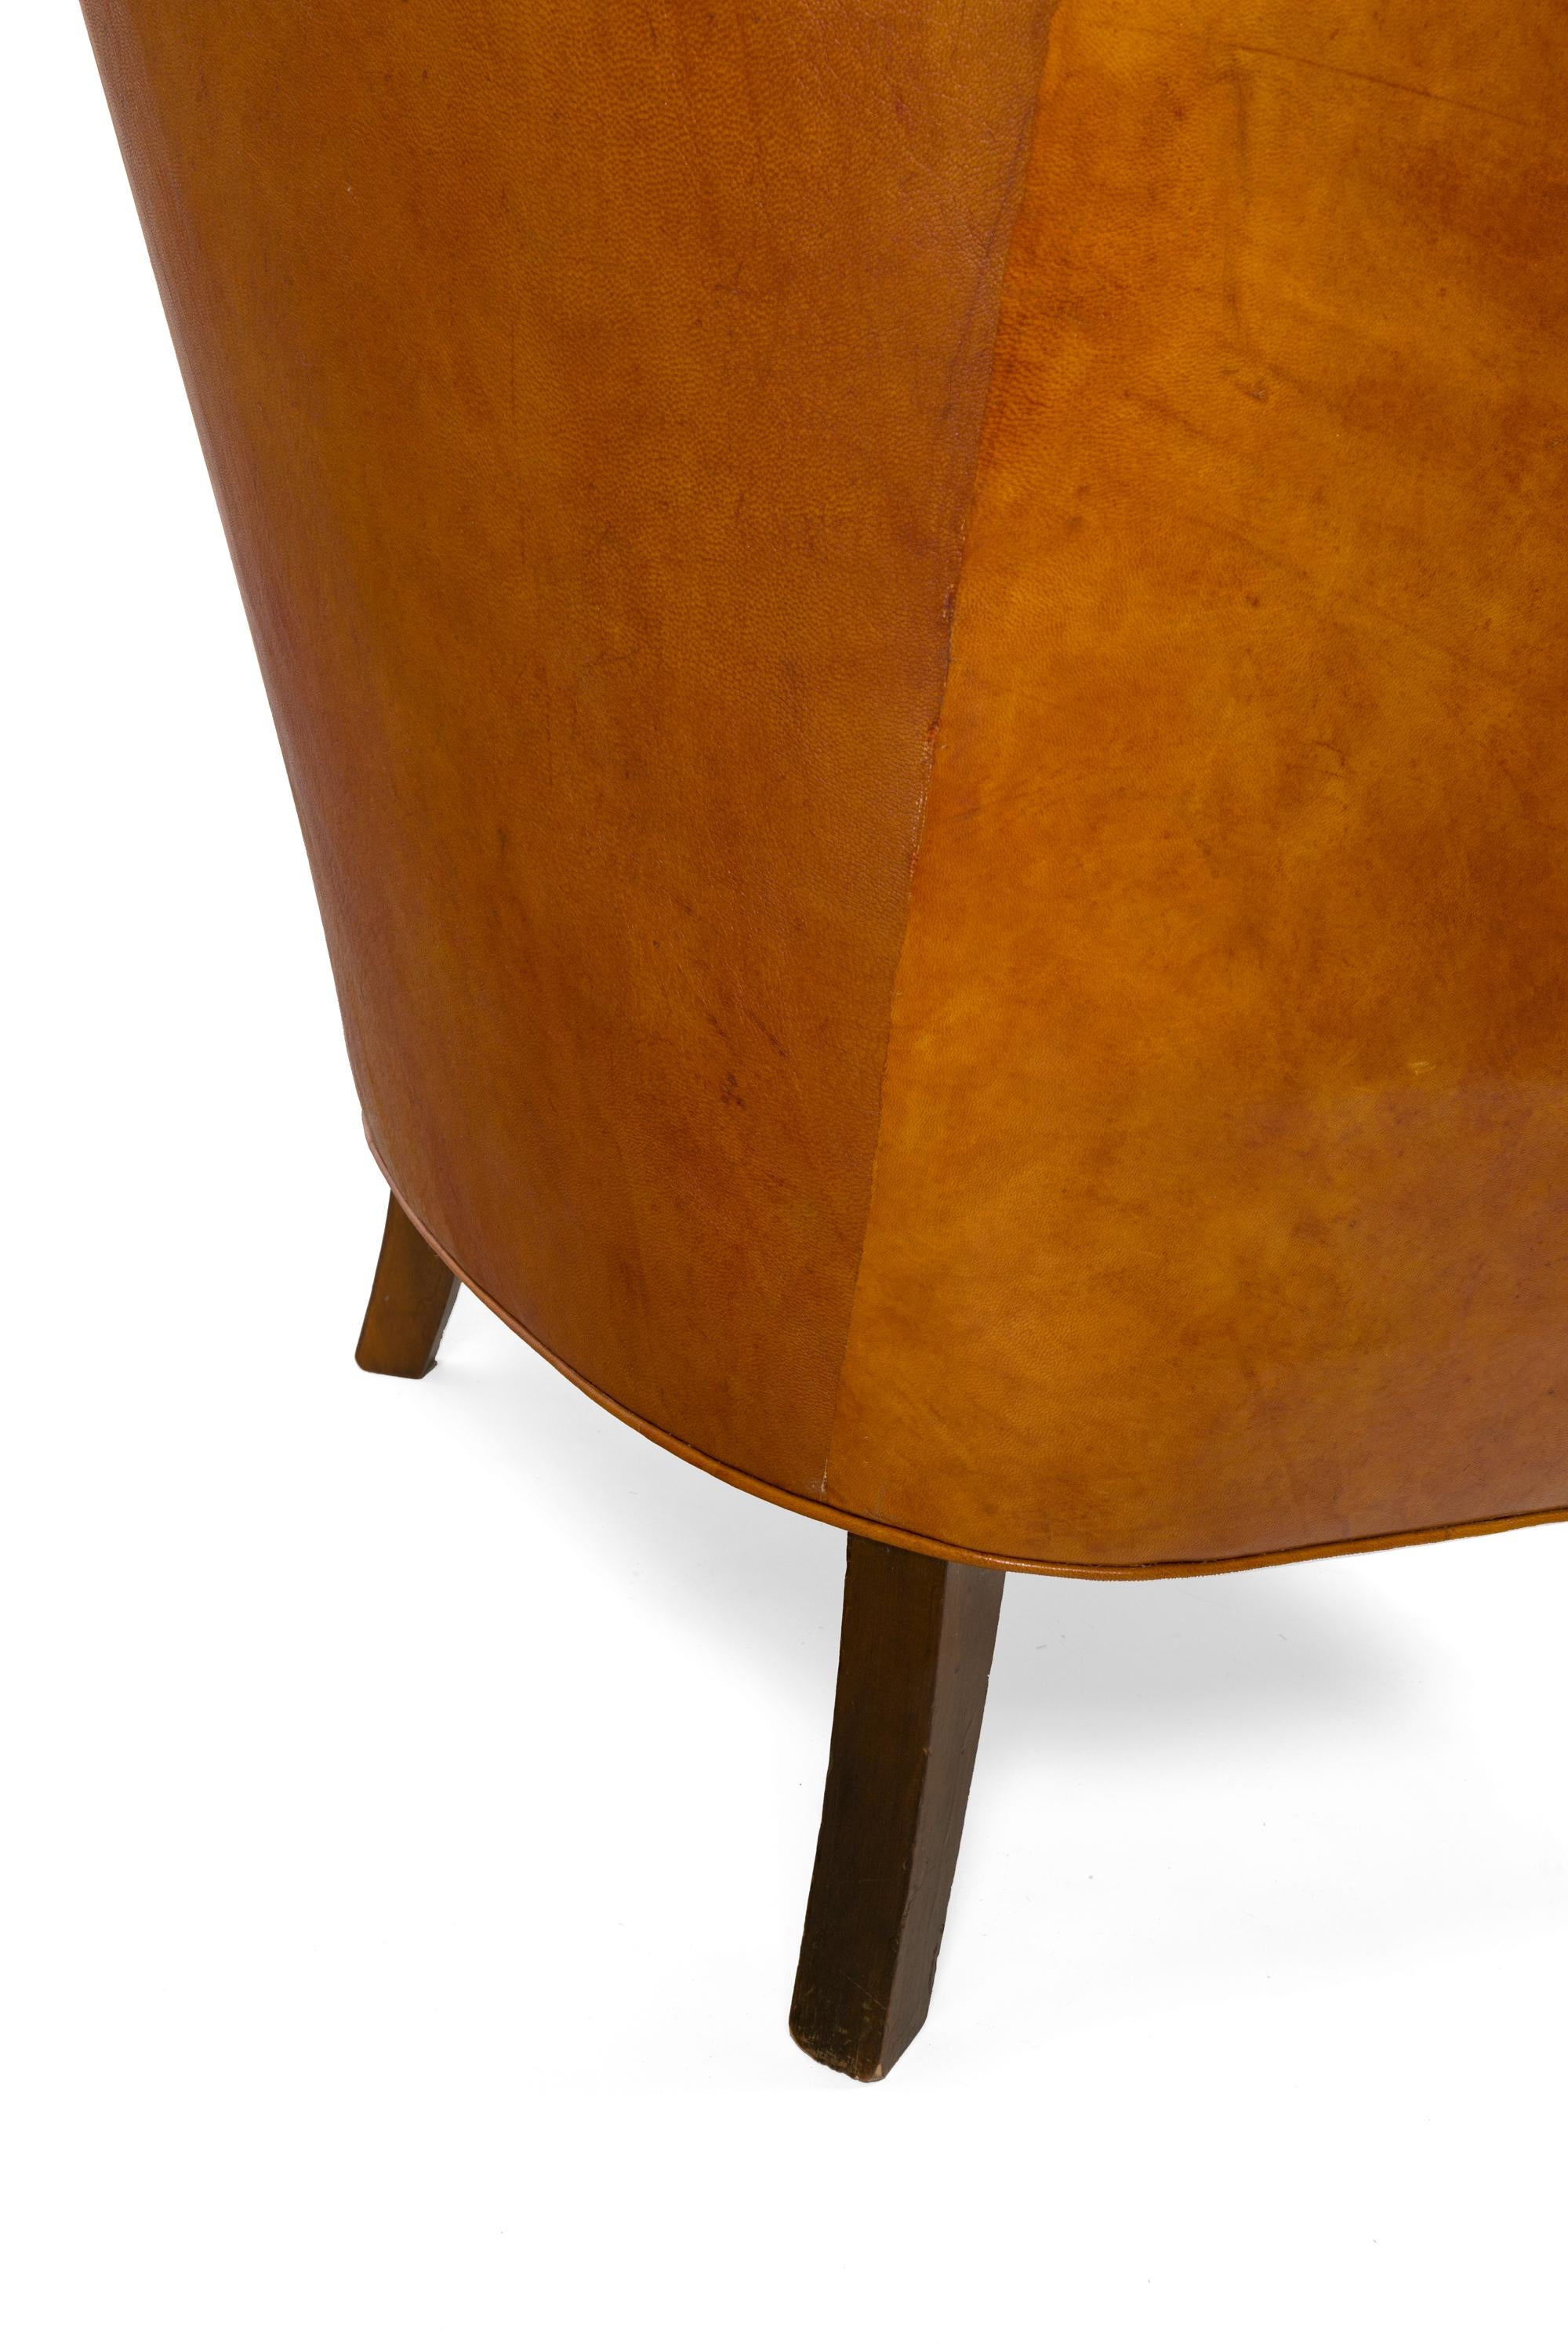 Steen Eiler Rasmussen Asymmetrical Leather Armchair for AJ Iverson, Denmark 1936 In Good Condition In New York, NY